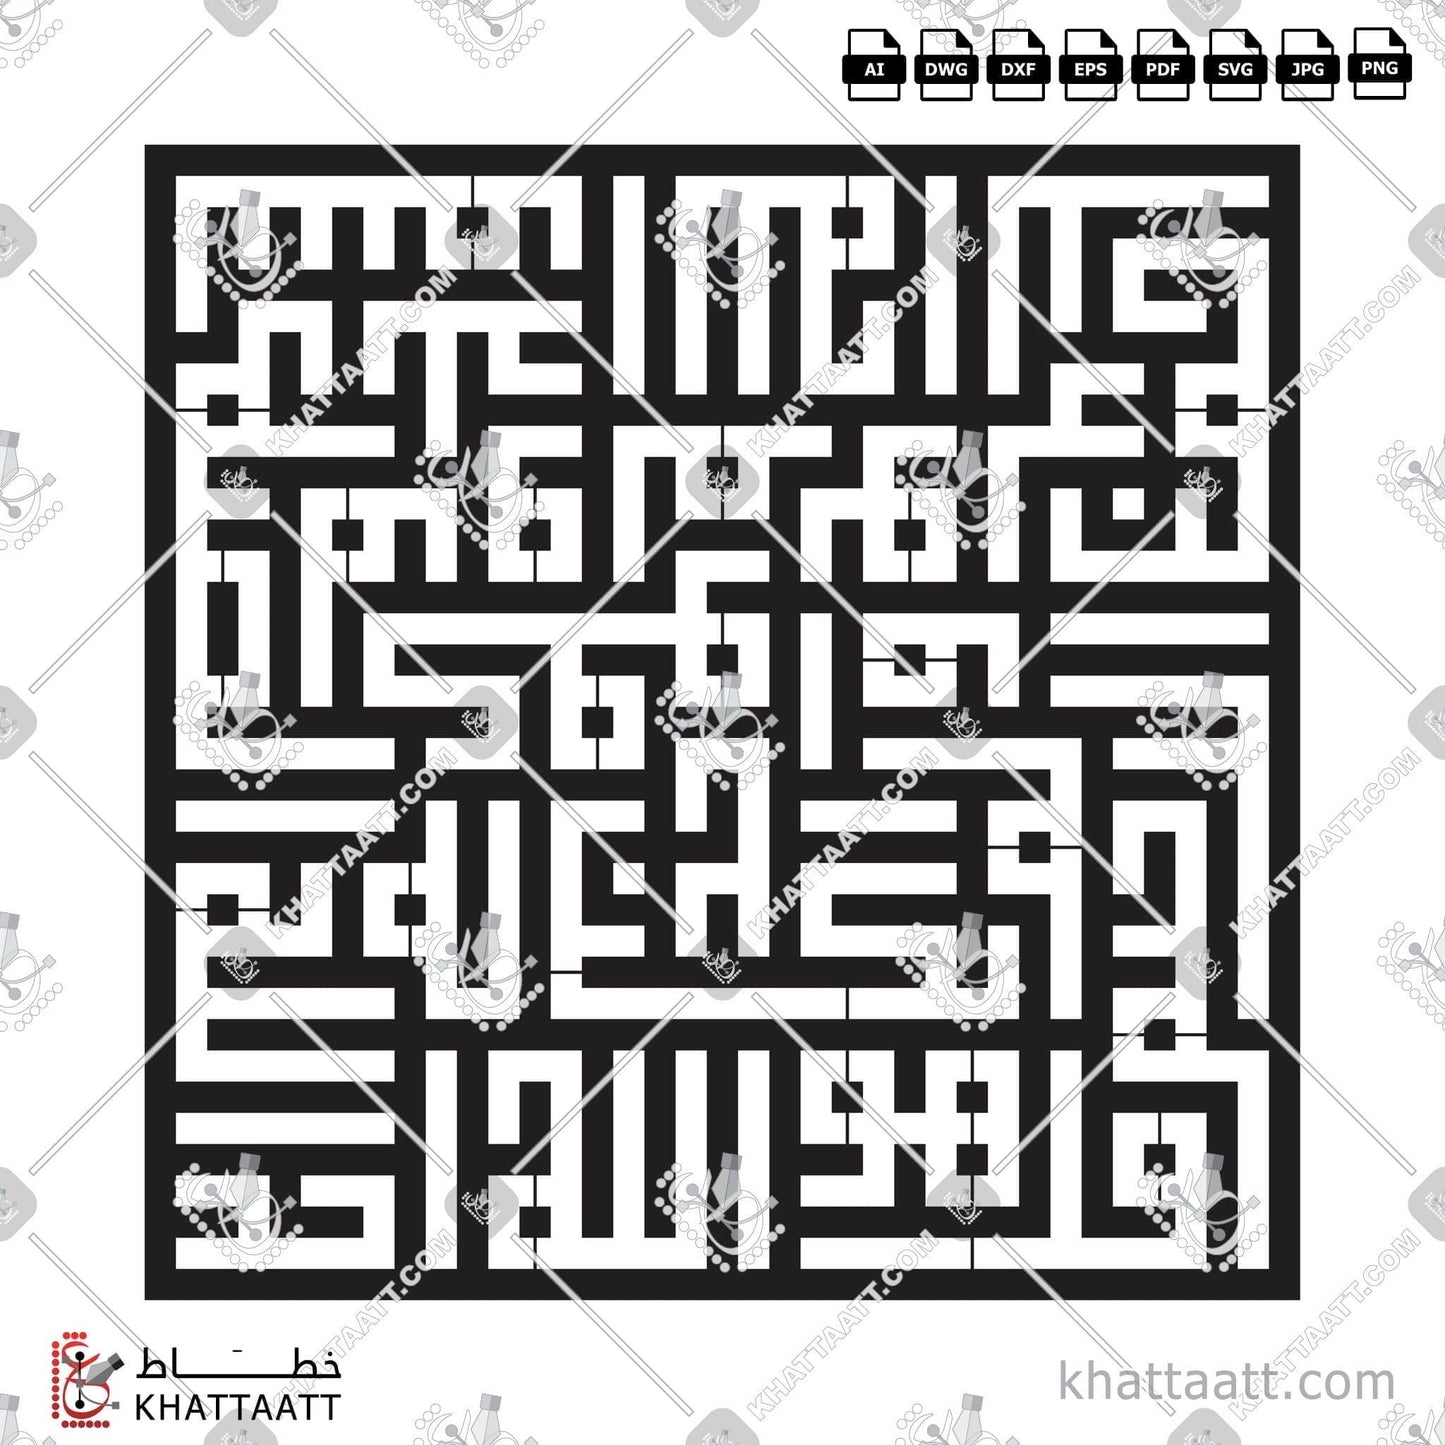 Download Arabic Calligraphy of Surat Al-Ikhlas - سورة الإخلاص in Kufi - الخط الكوفي in vector and .png